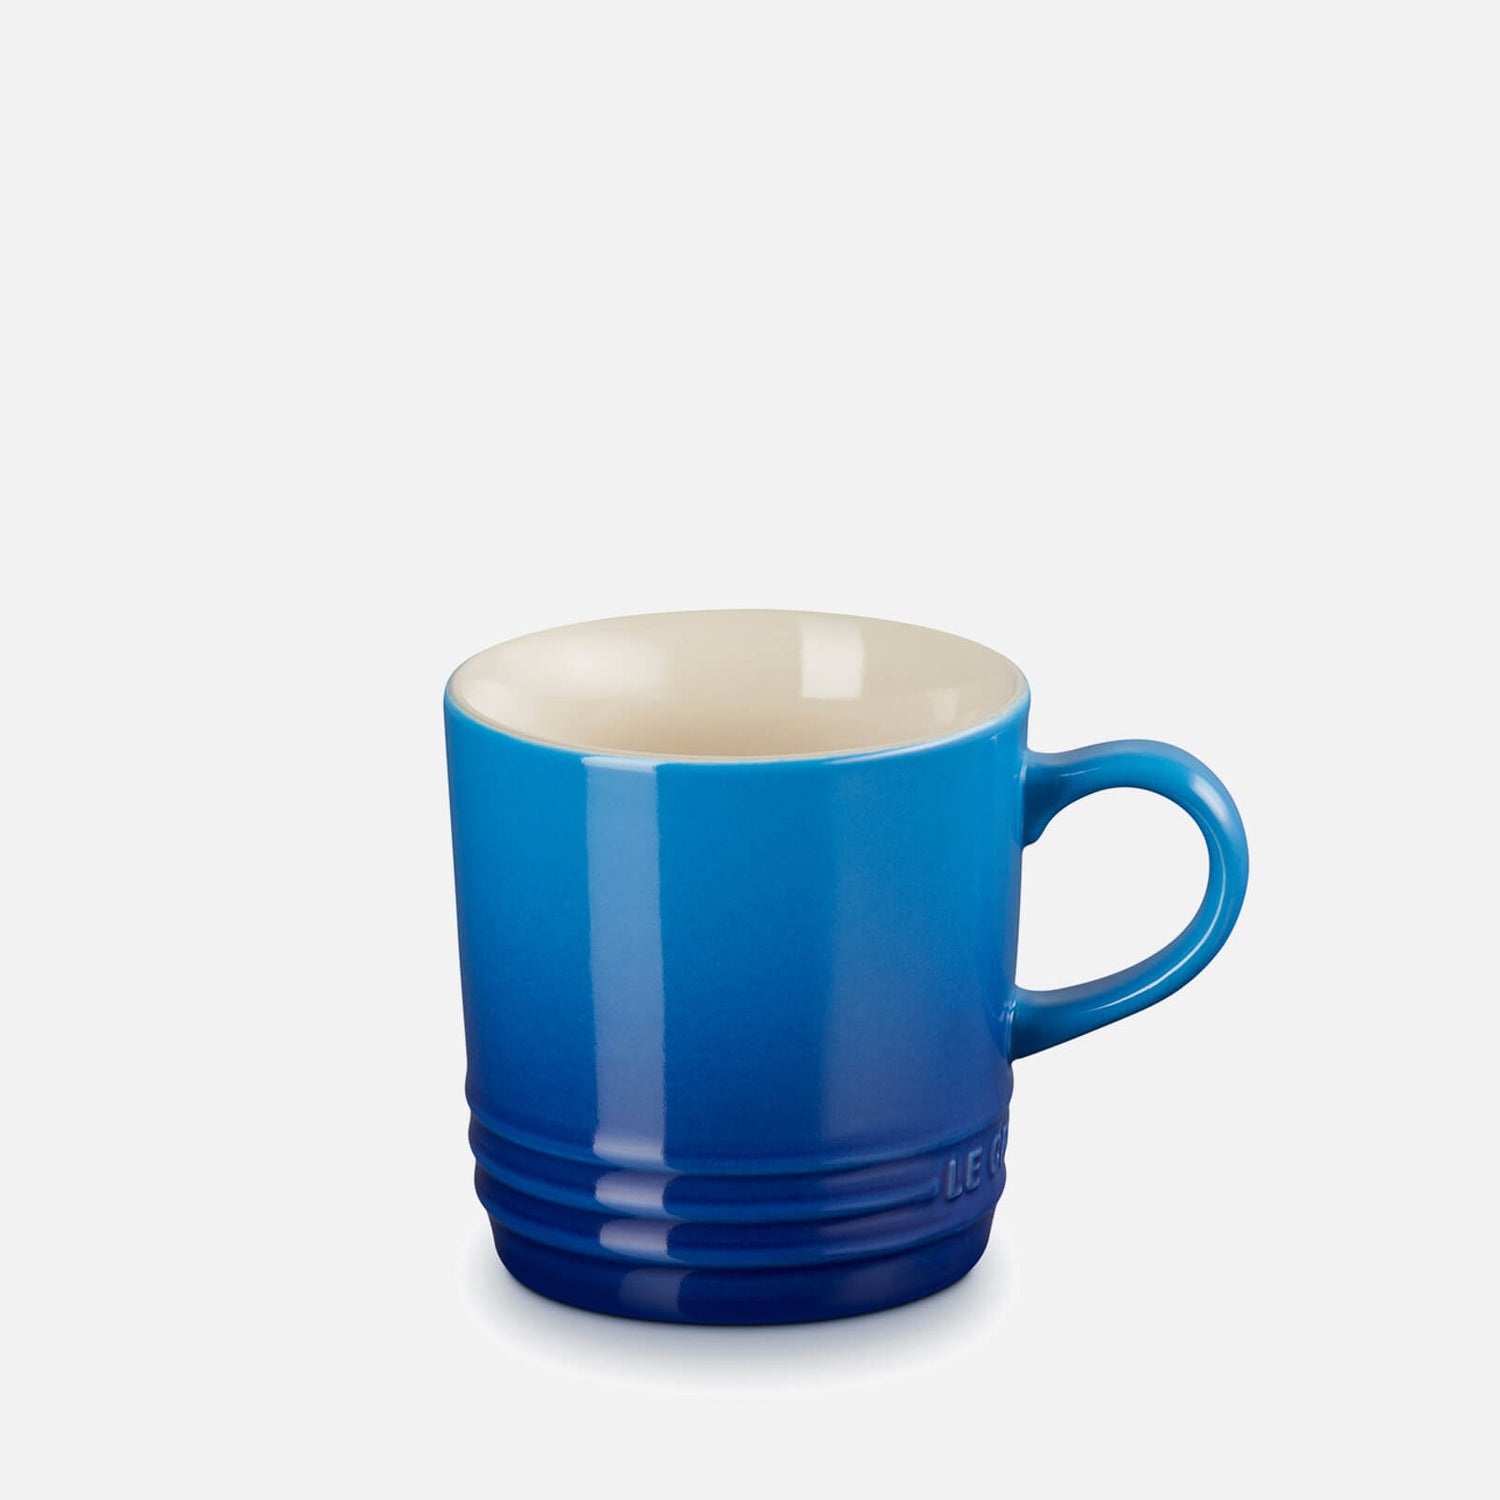 Le Creuset Stoneware Cappuccino Mug - 200ml - Azure Blue